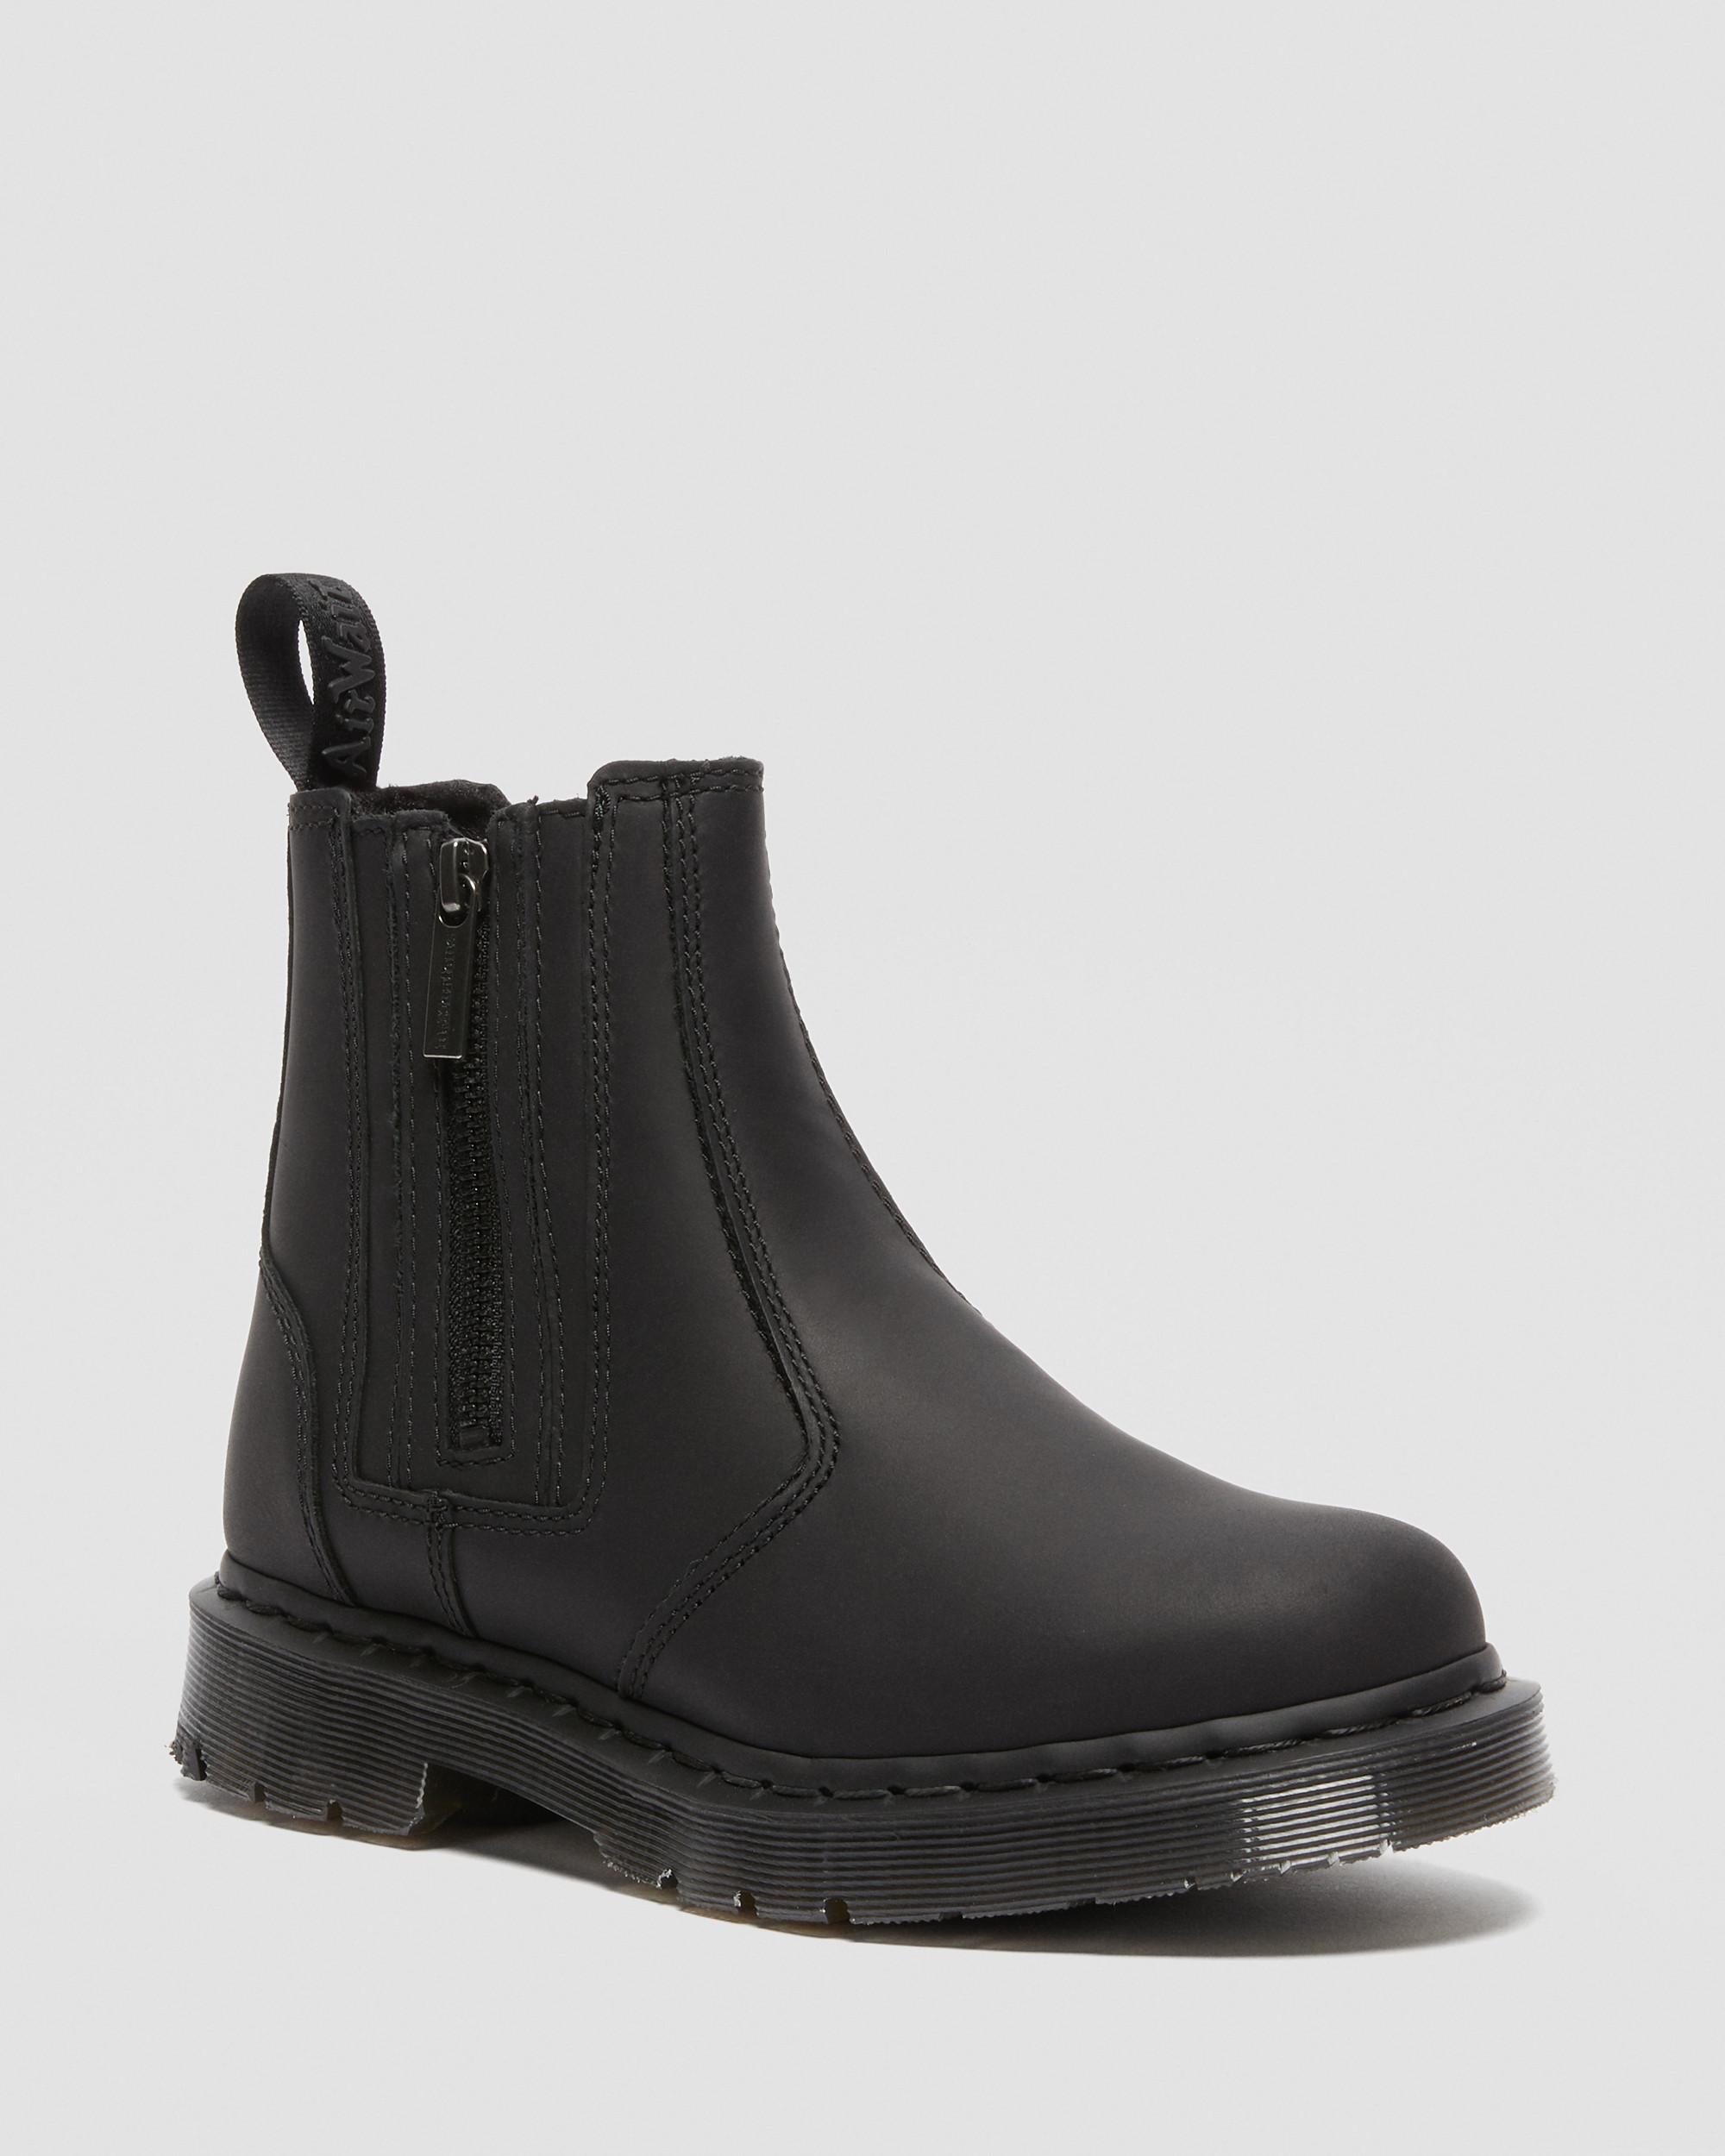 2976 Alyson DM's Wintergrip Chelsea Boots in Black